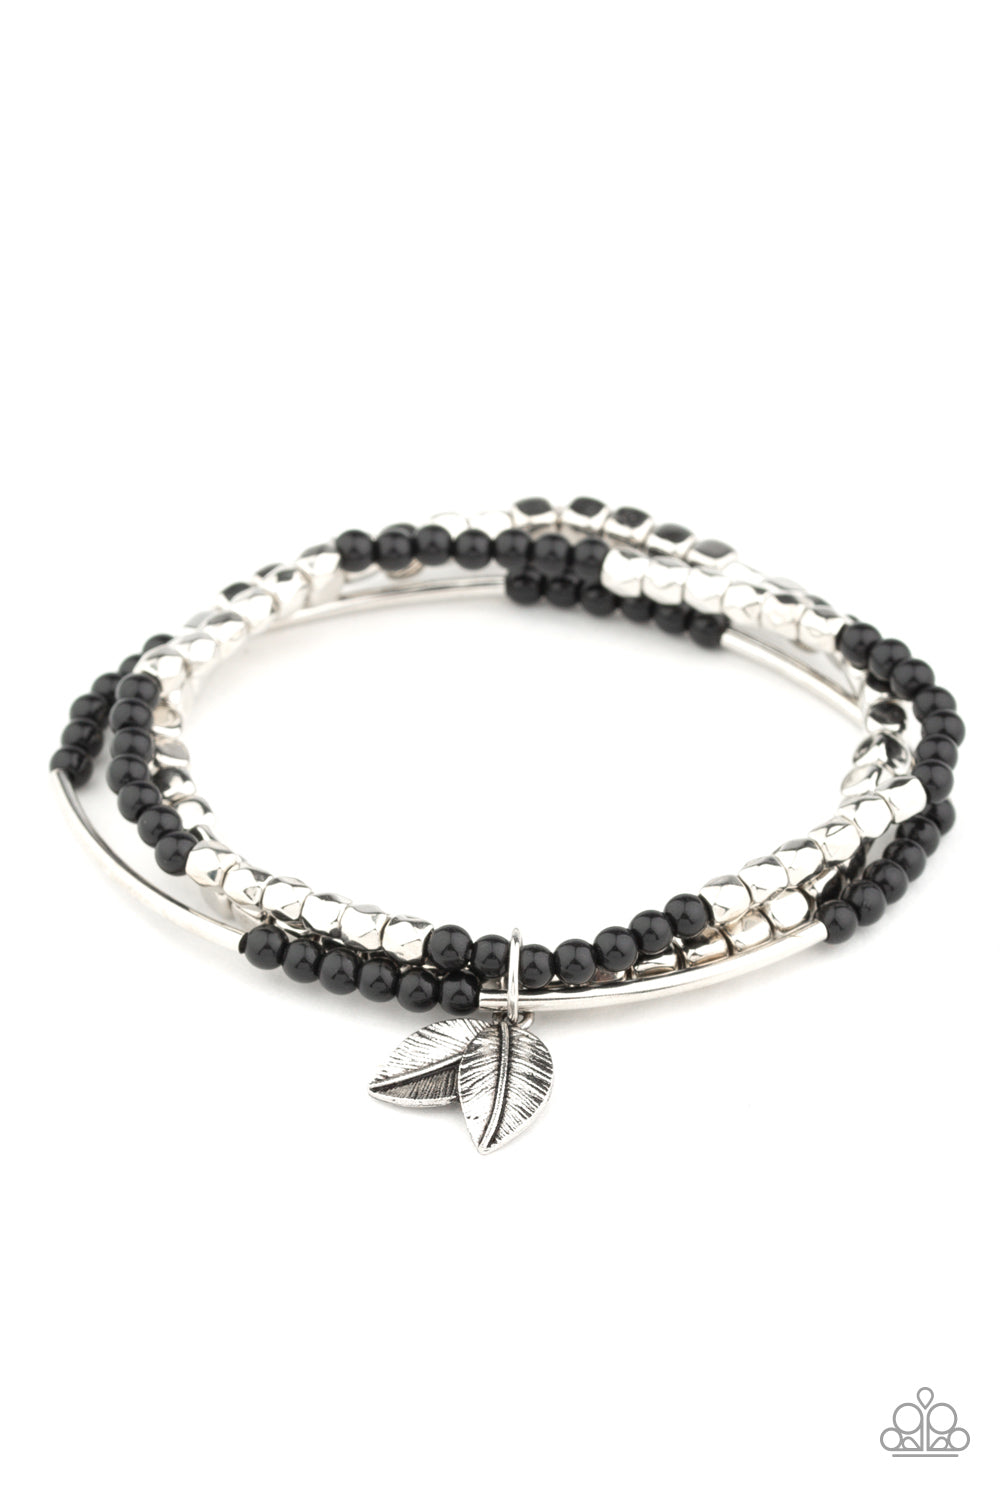 Paparazzi Desert Wanderer - Black - Feather Leaf Charm - Silver Beads - Stretchy Bracelet - $5 Jewelry with Ashley Swint